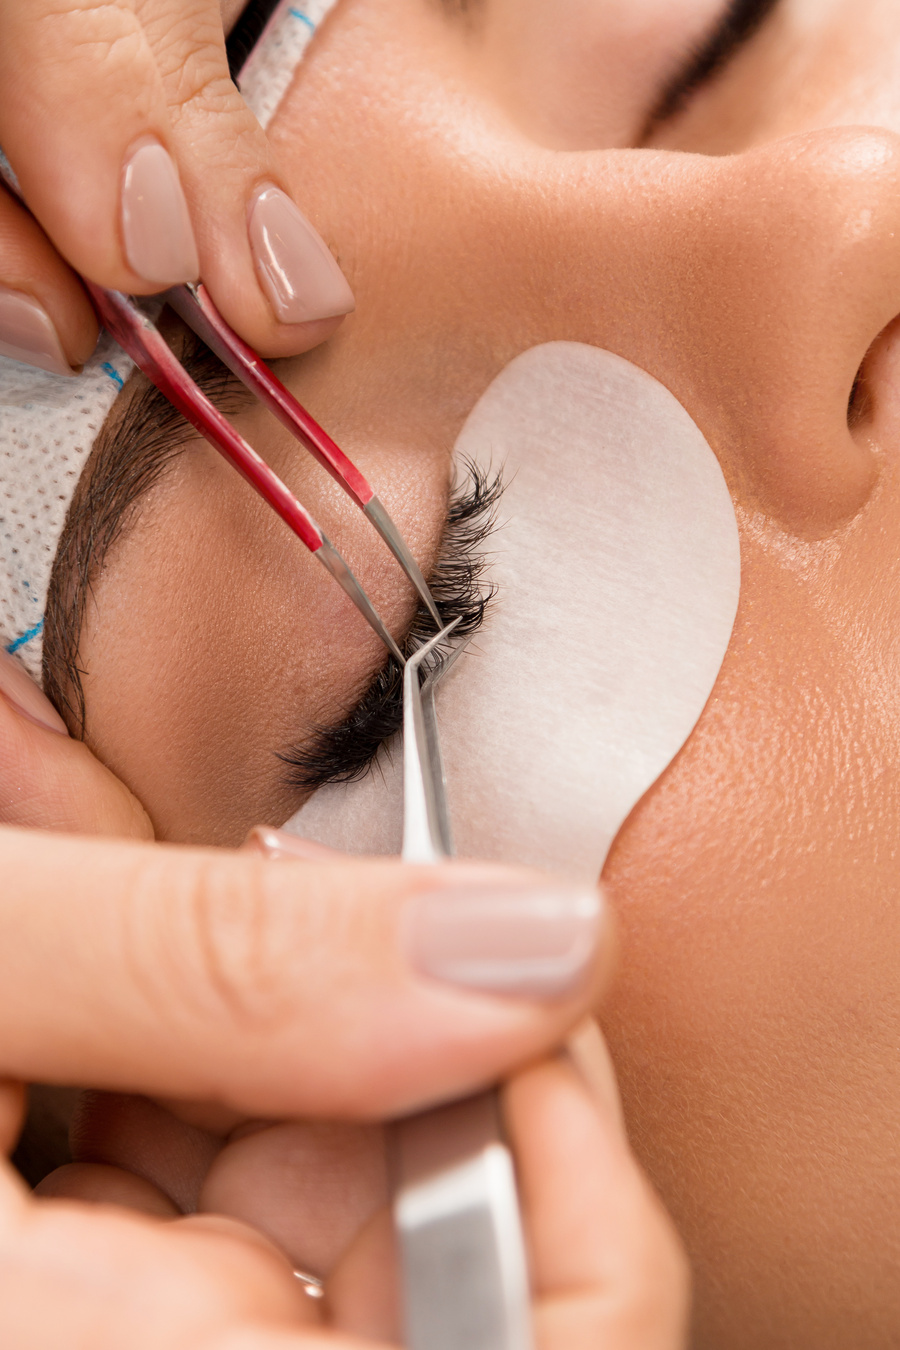 Procedure of Eyelashes Extension